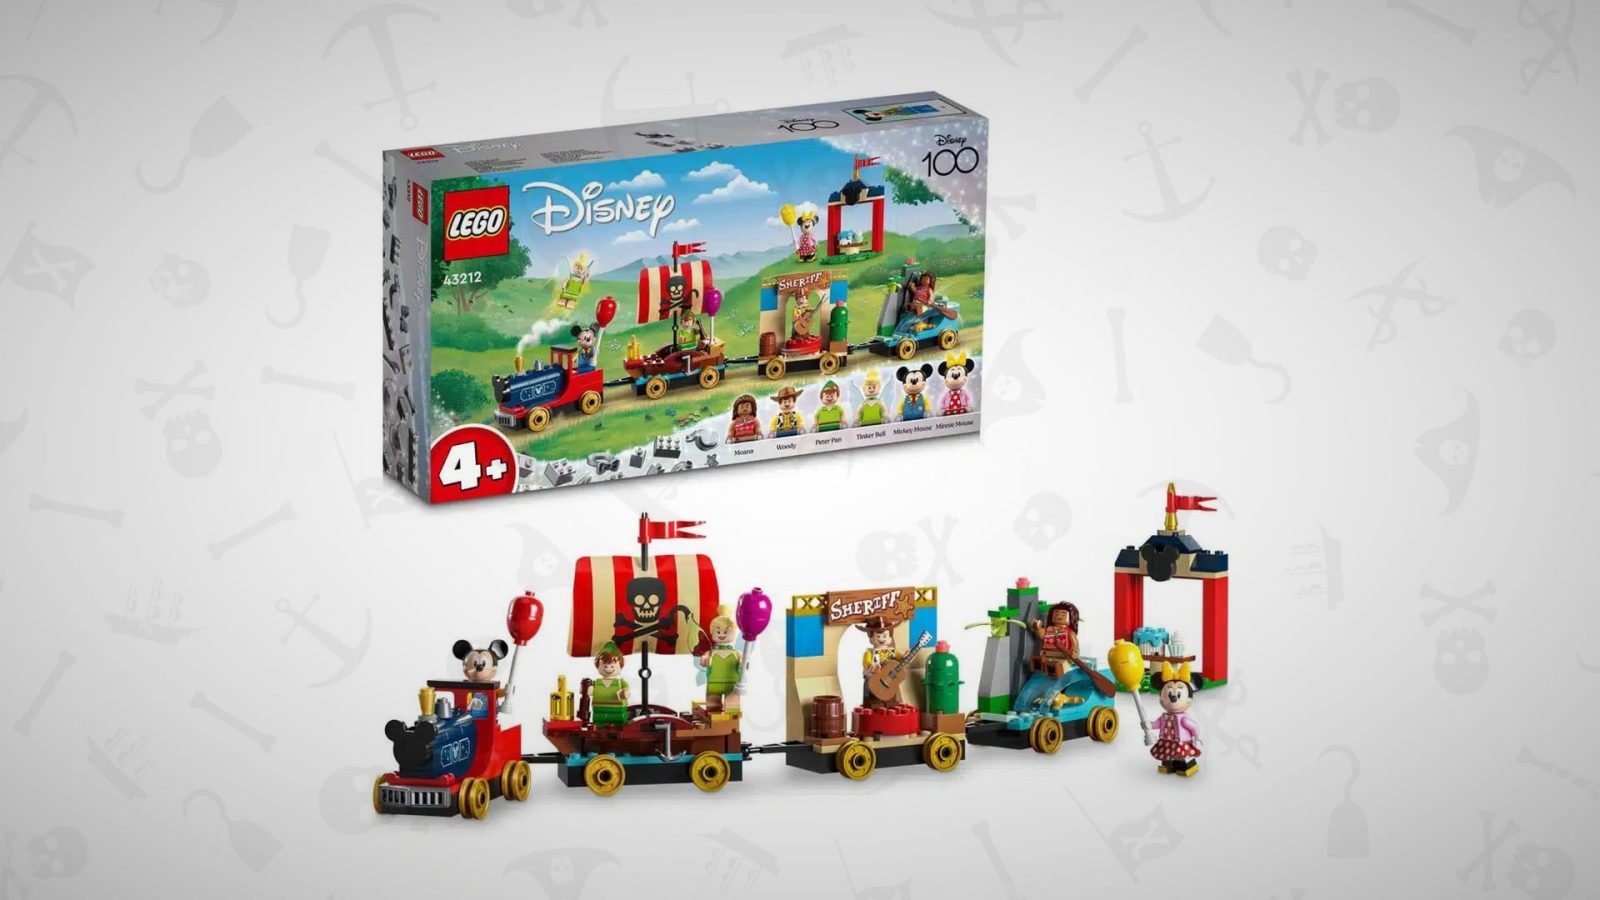 LEGO 43212 Disney Celebration Train with Peter Pan & Pirate Ship Sail